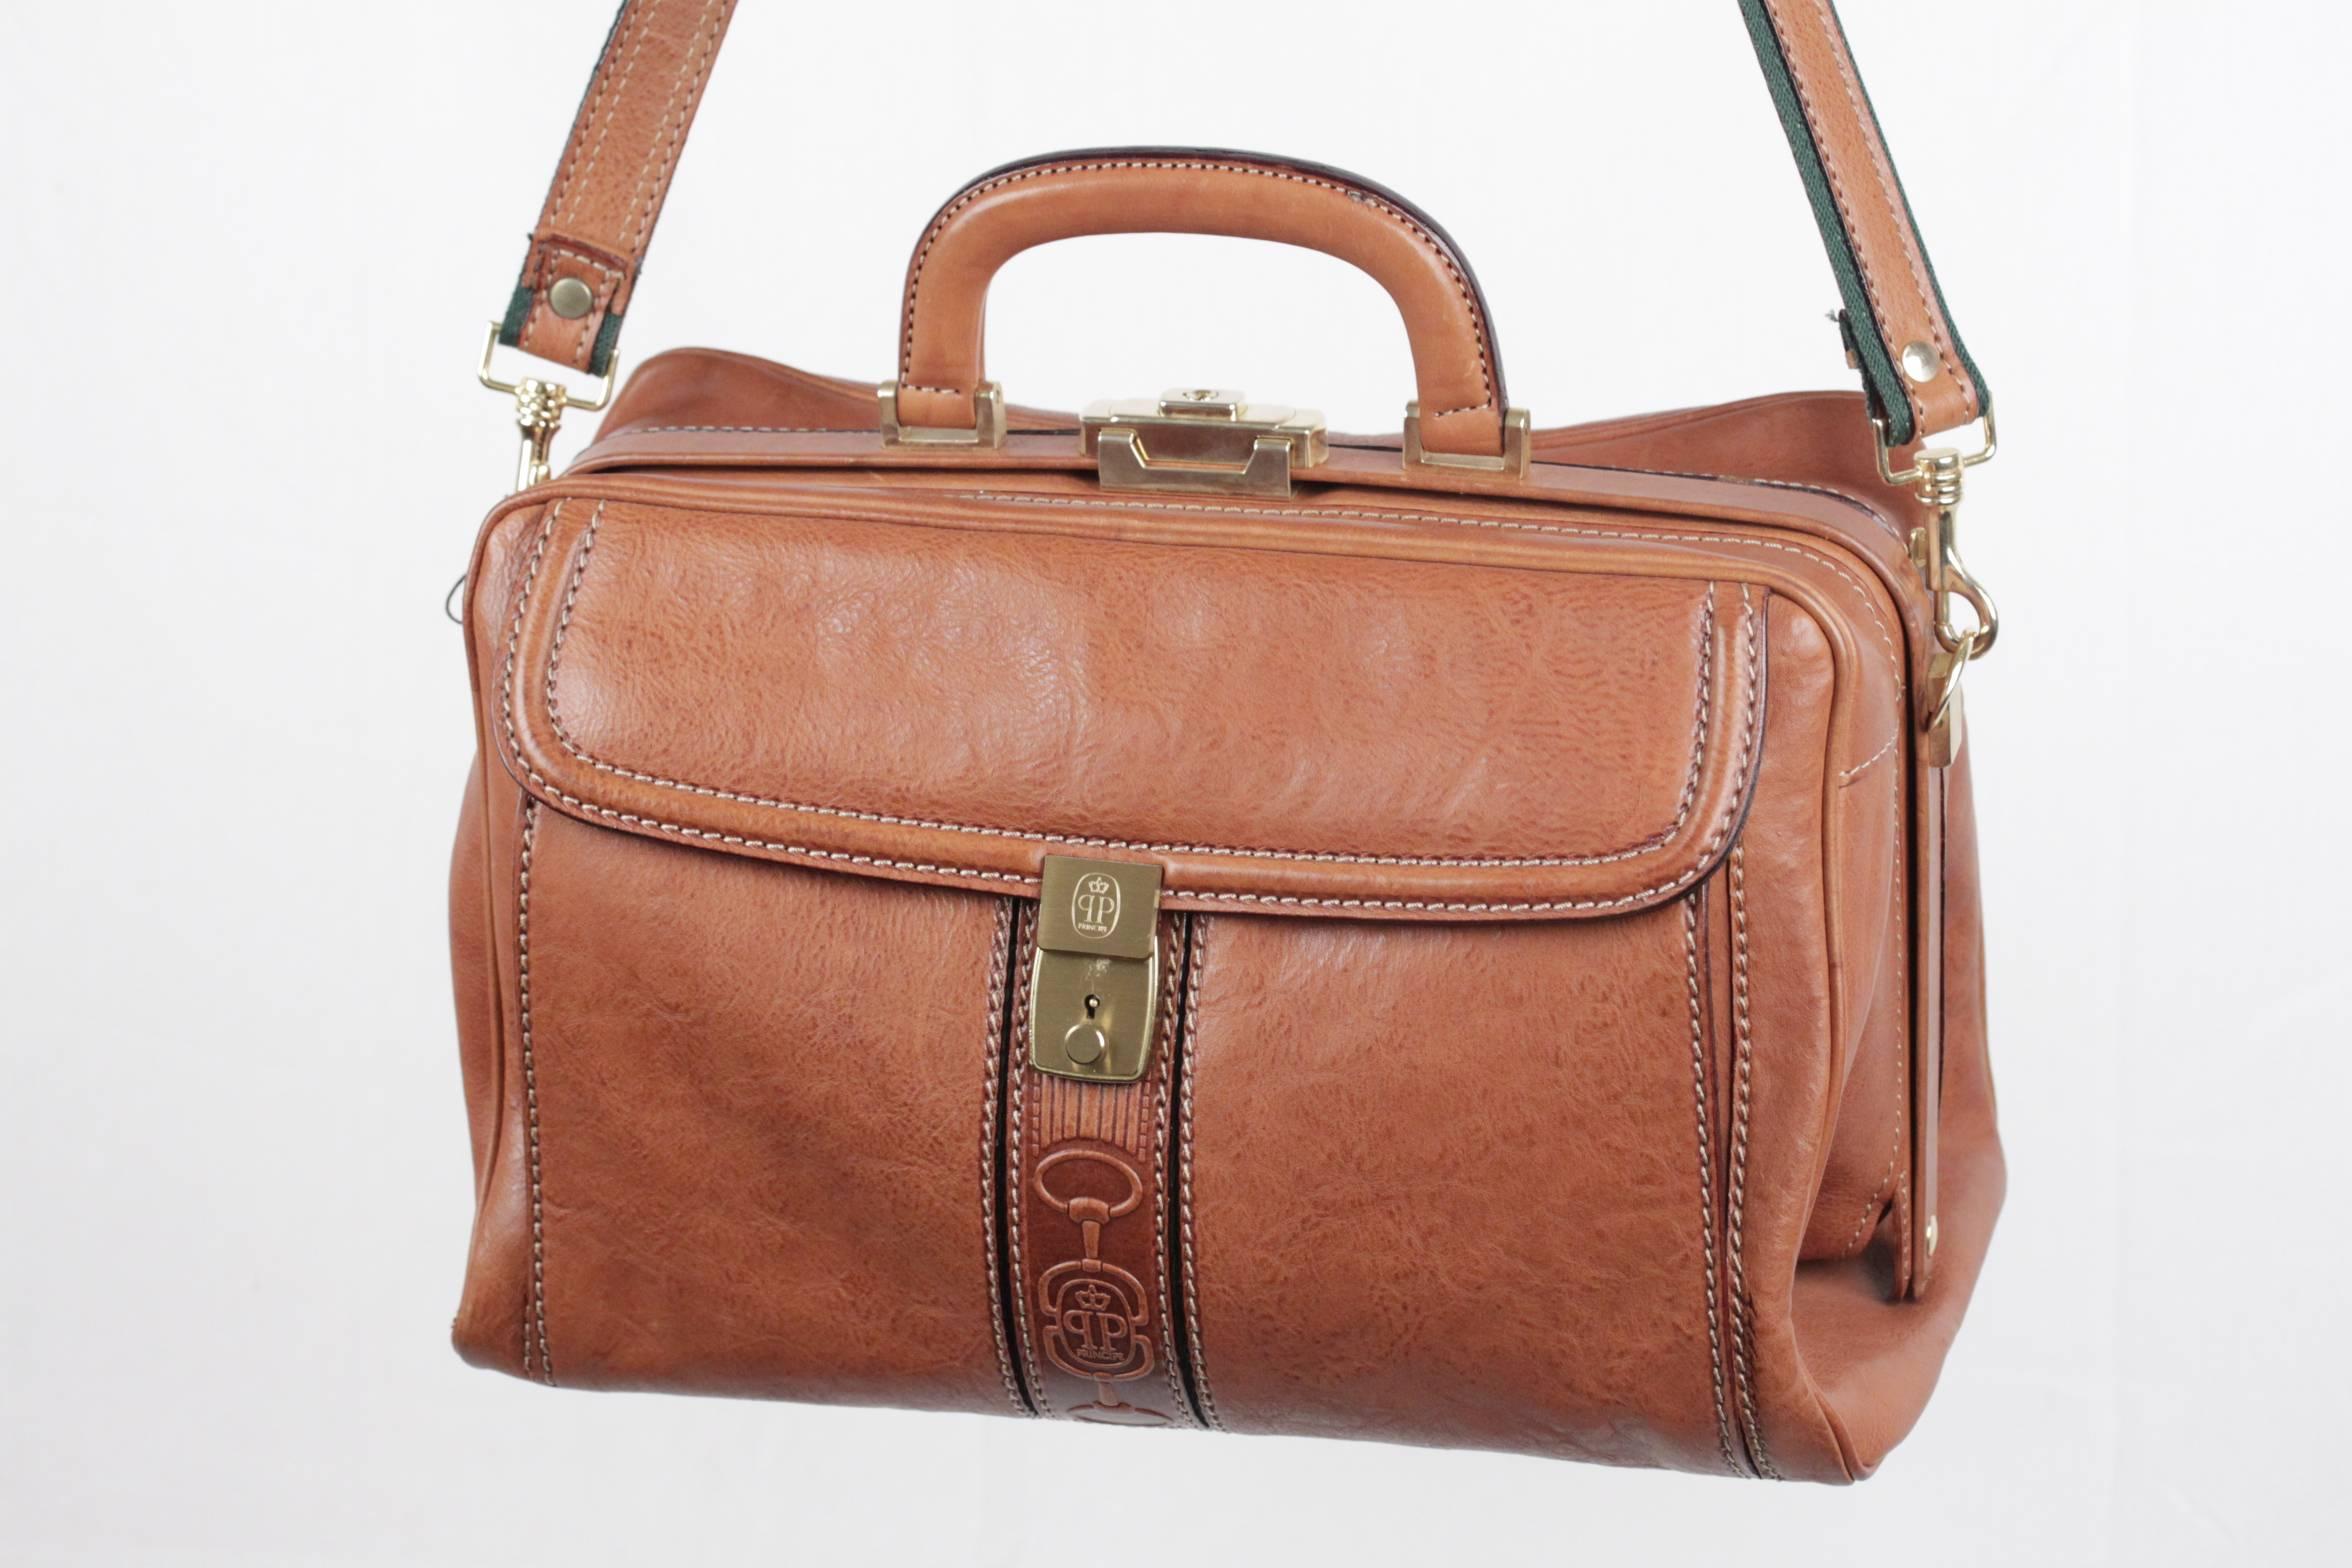 PRINCIPE Vintage Tan Leather DOCTOR BAG Top Handle HANDBAG w/ Strap at ...